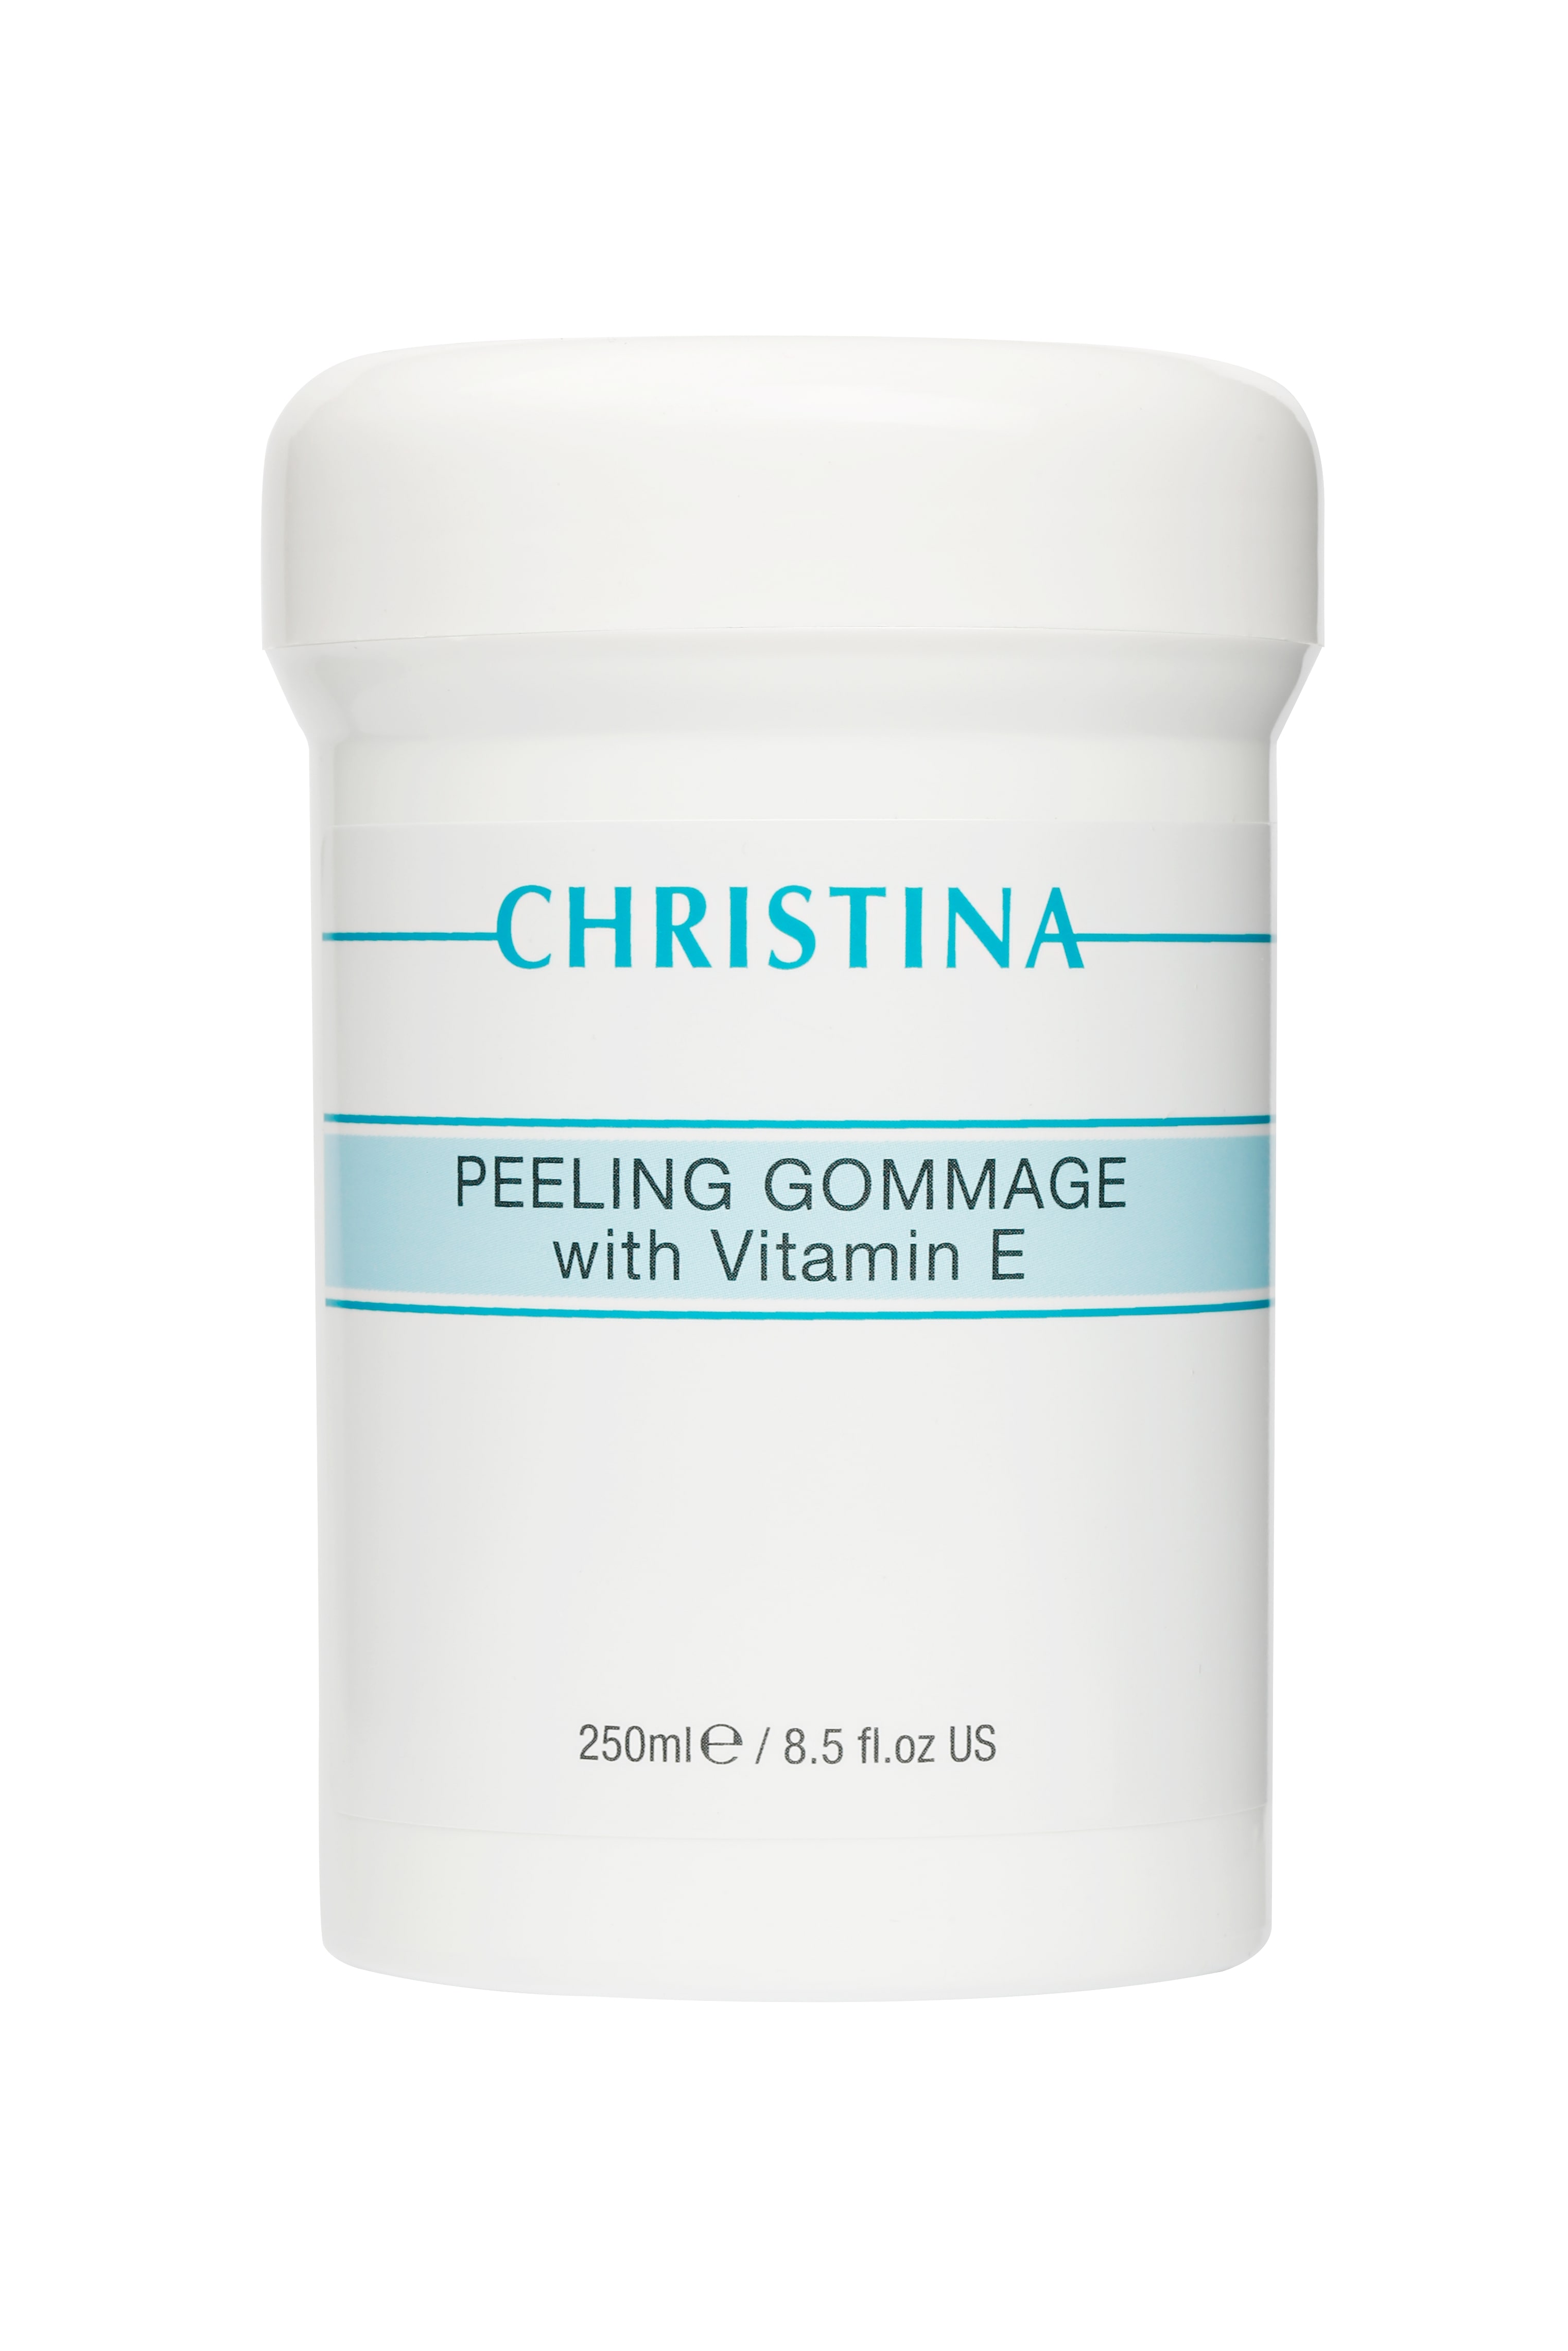 Пилинг CHRISTINA гоммаж с витамином Е Peeling Gommage with Vitamin Е